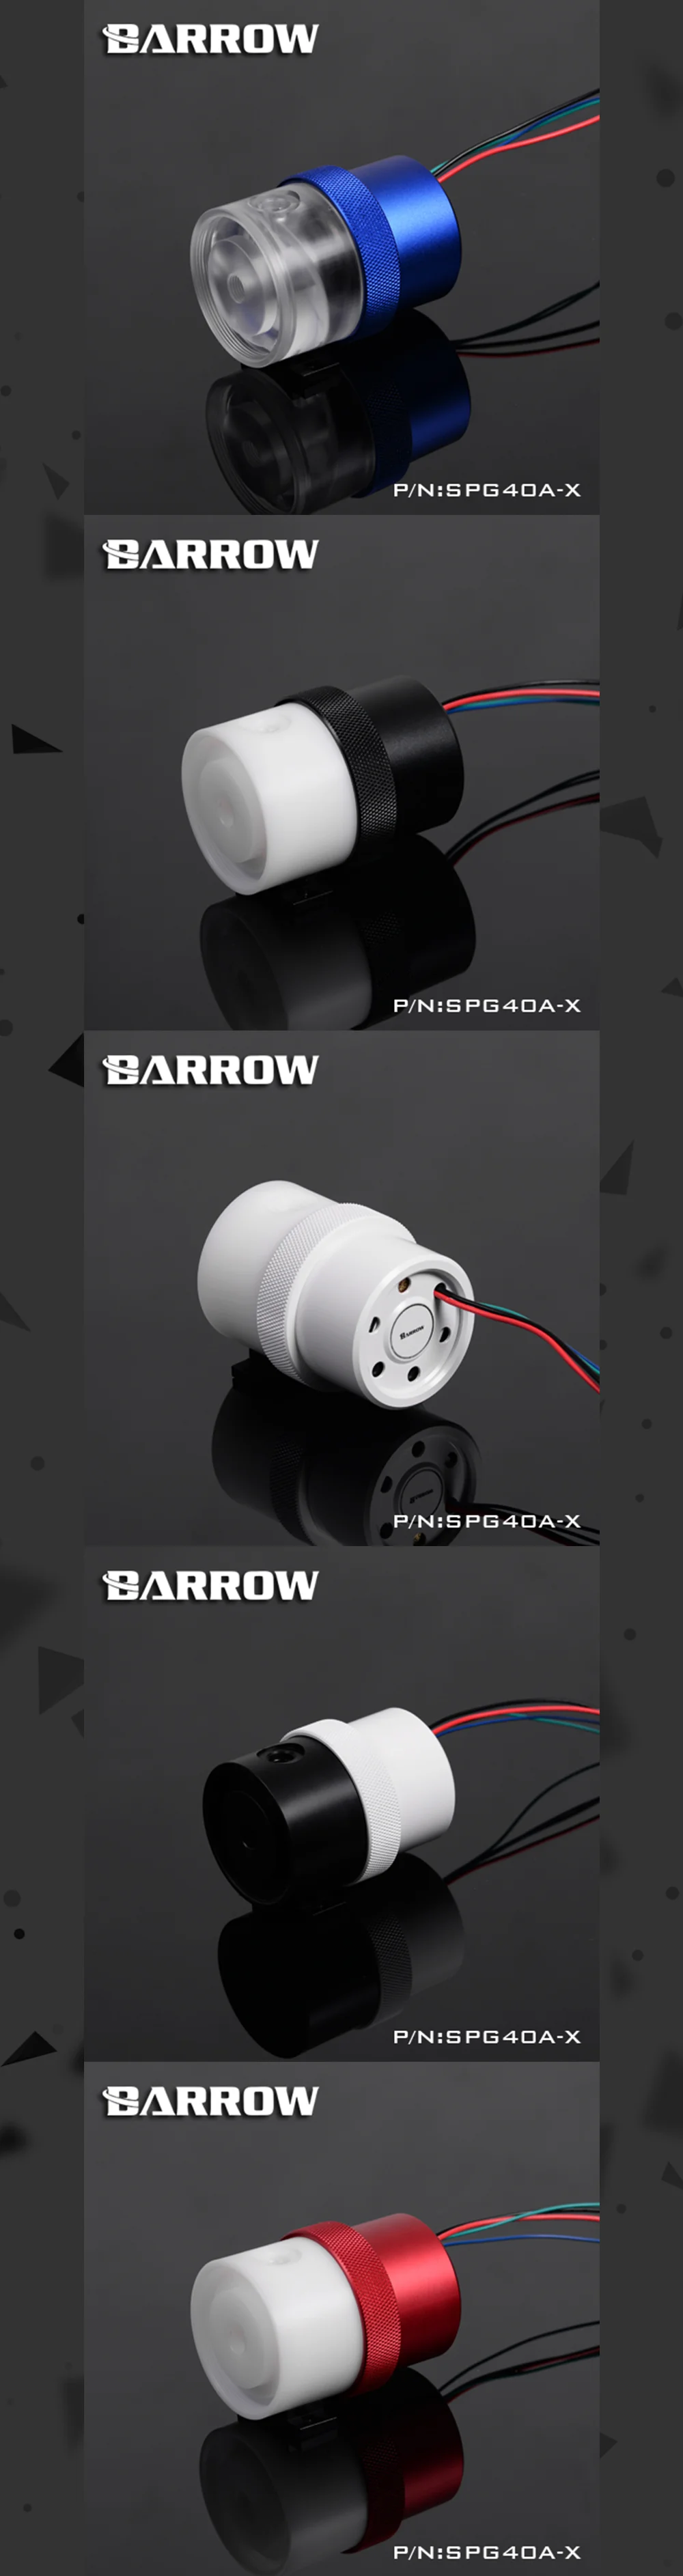 Barrow SPG40A-X, 18W PWM Pumps, Maximum Flow 1260L/H, Compatible with D5 Series Pump Cores and Components  